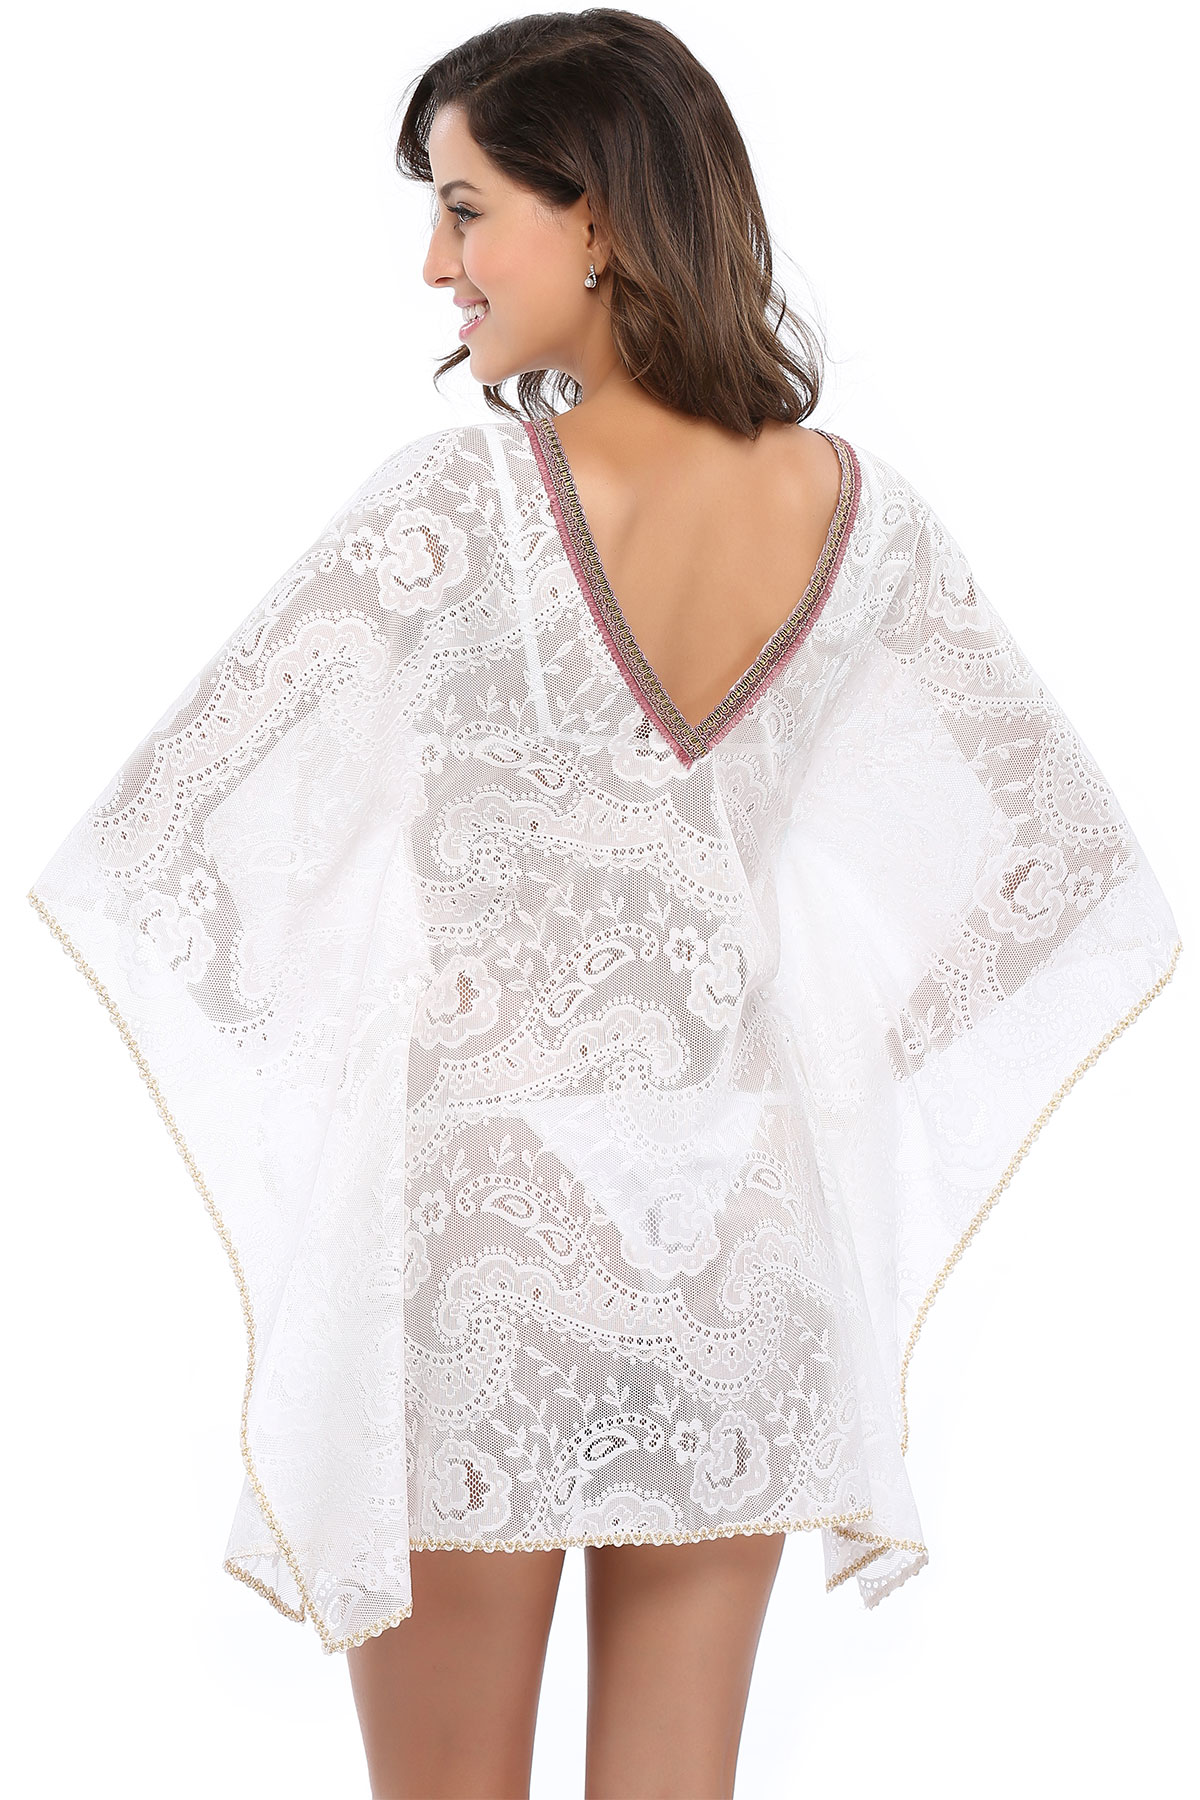 F4643 High Quality White Deep V Lace Beach Cover Dress